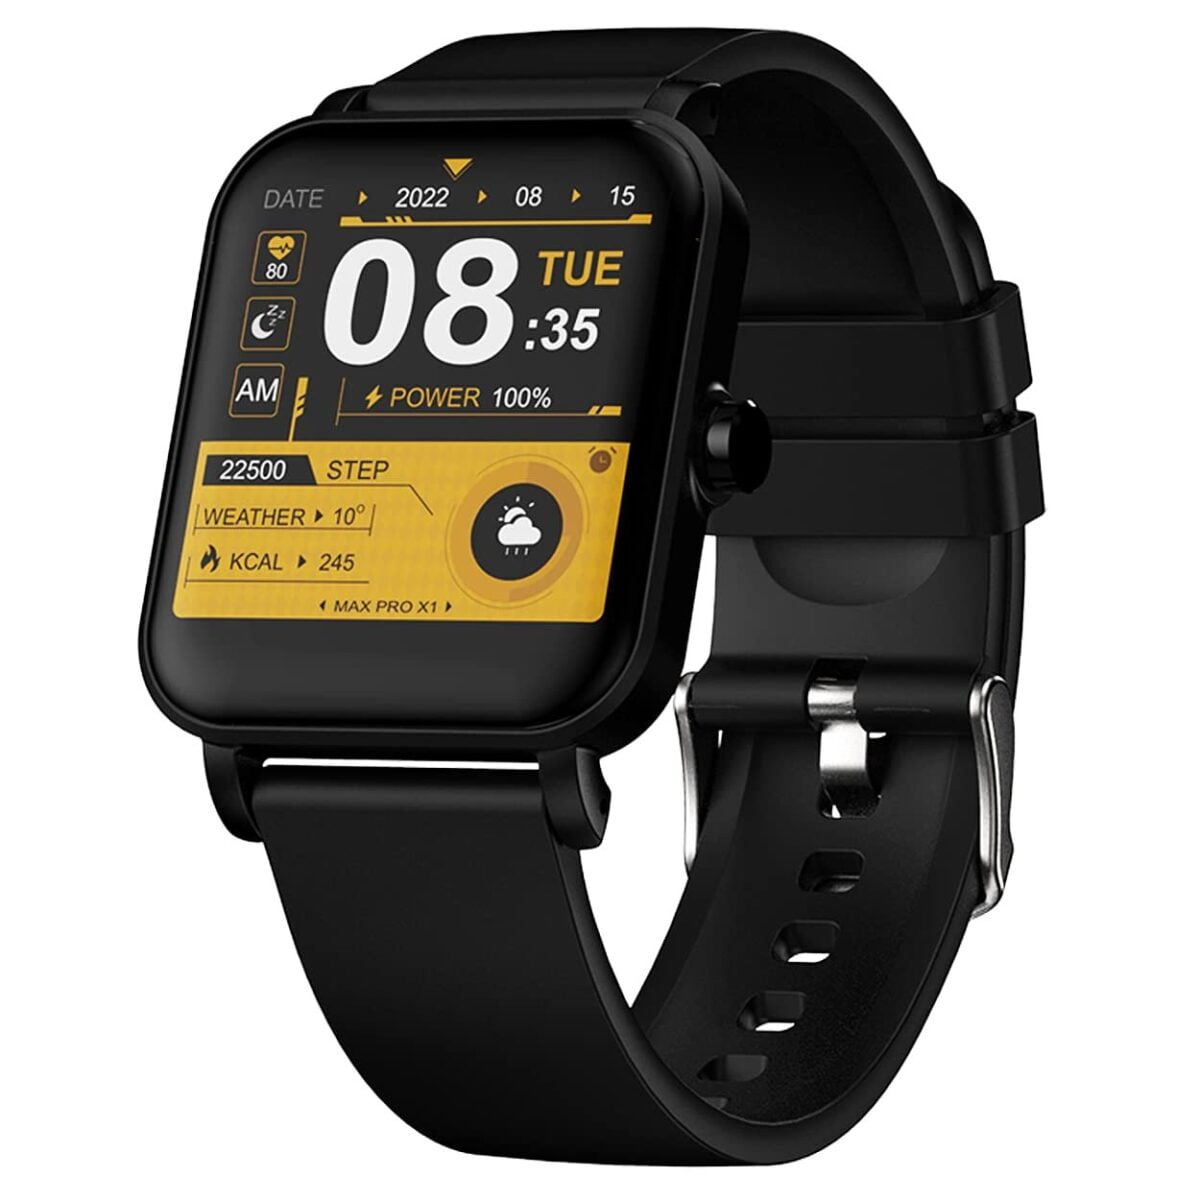 Maxima Max Pro X1 Smartwatch Black 1 Shop Mobile Accessories Online in India